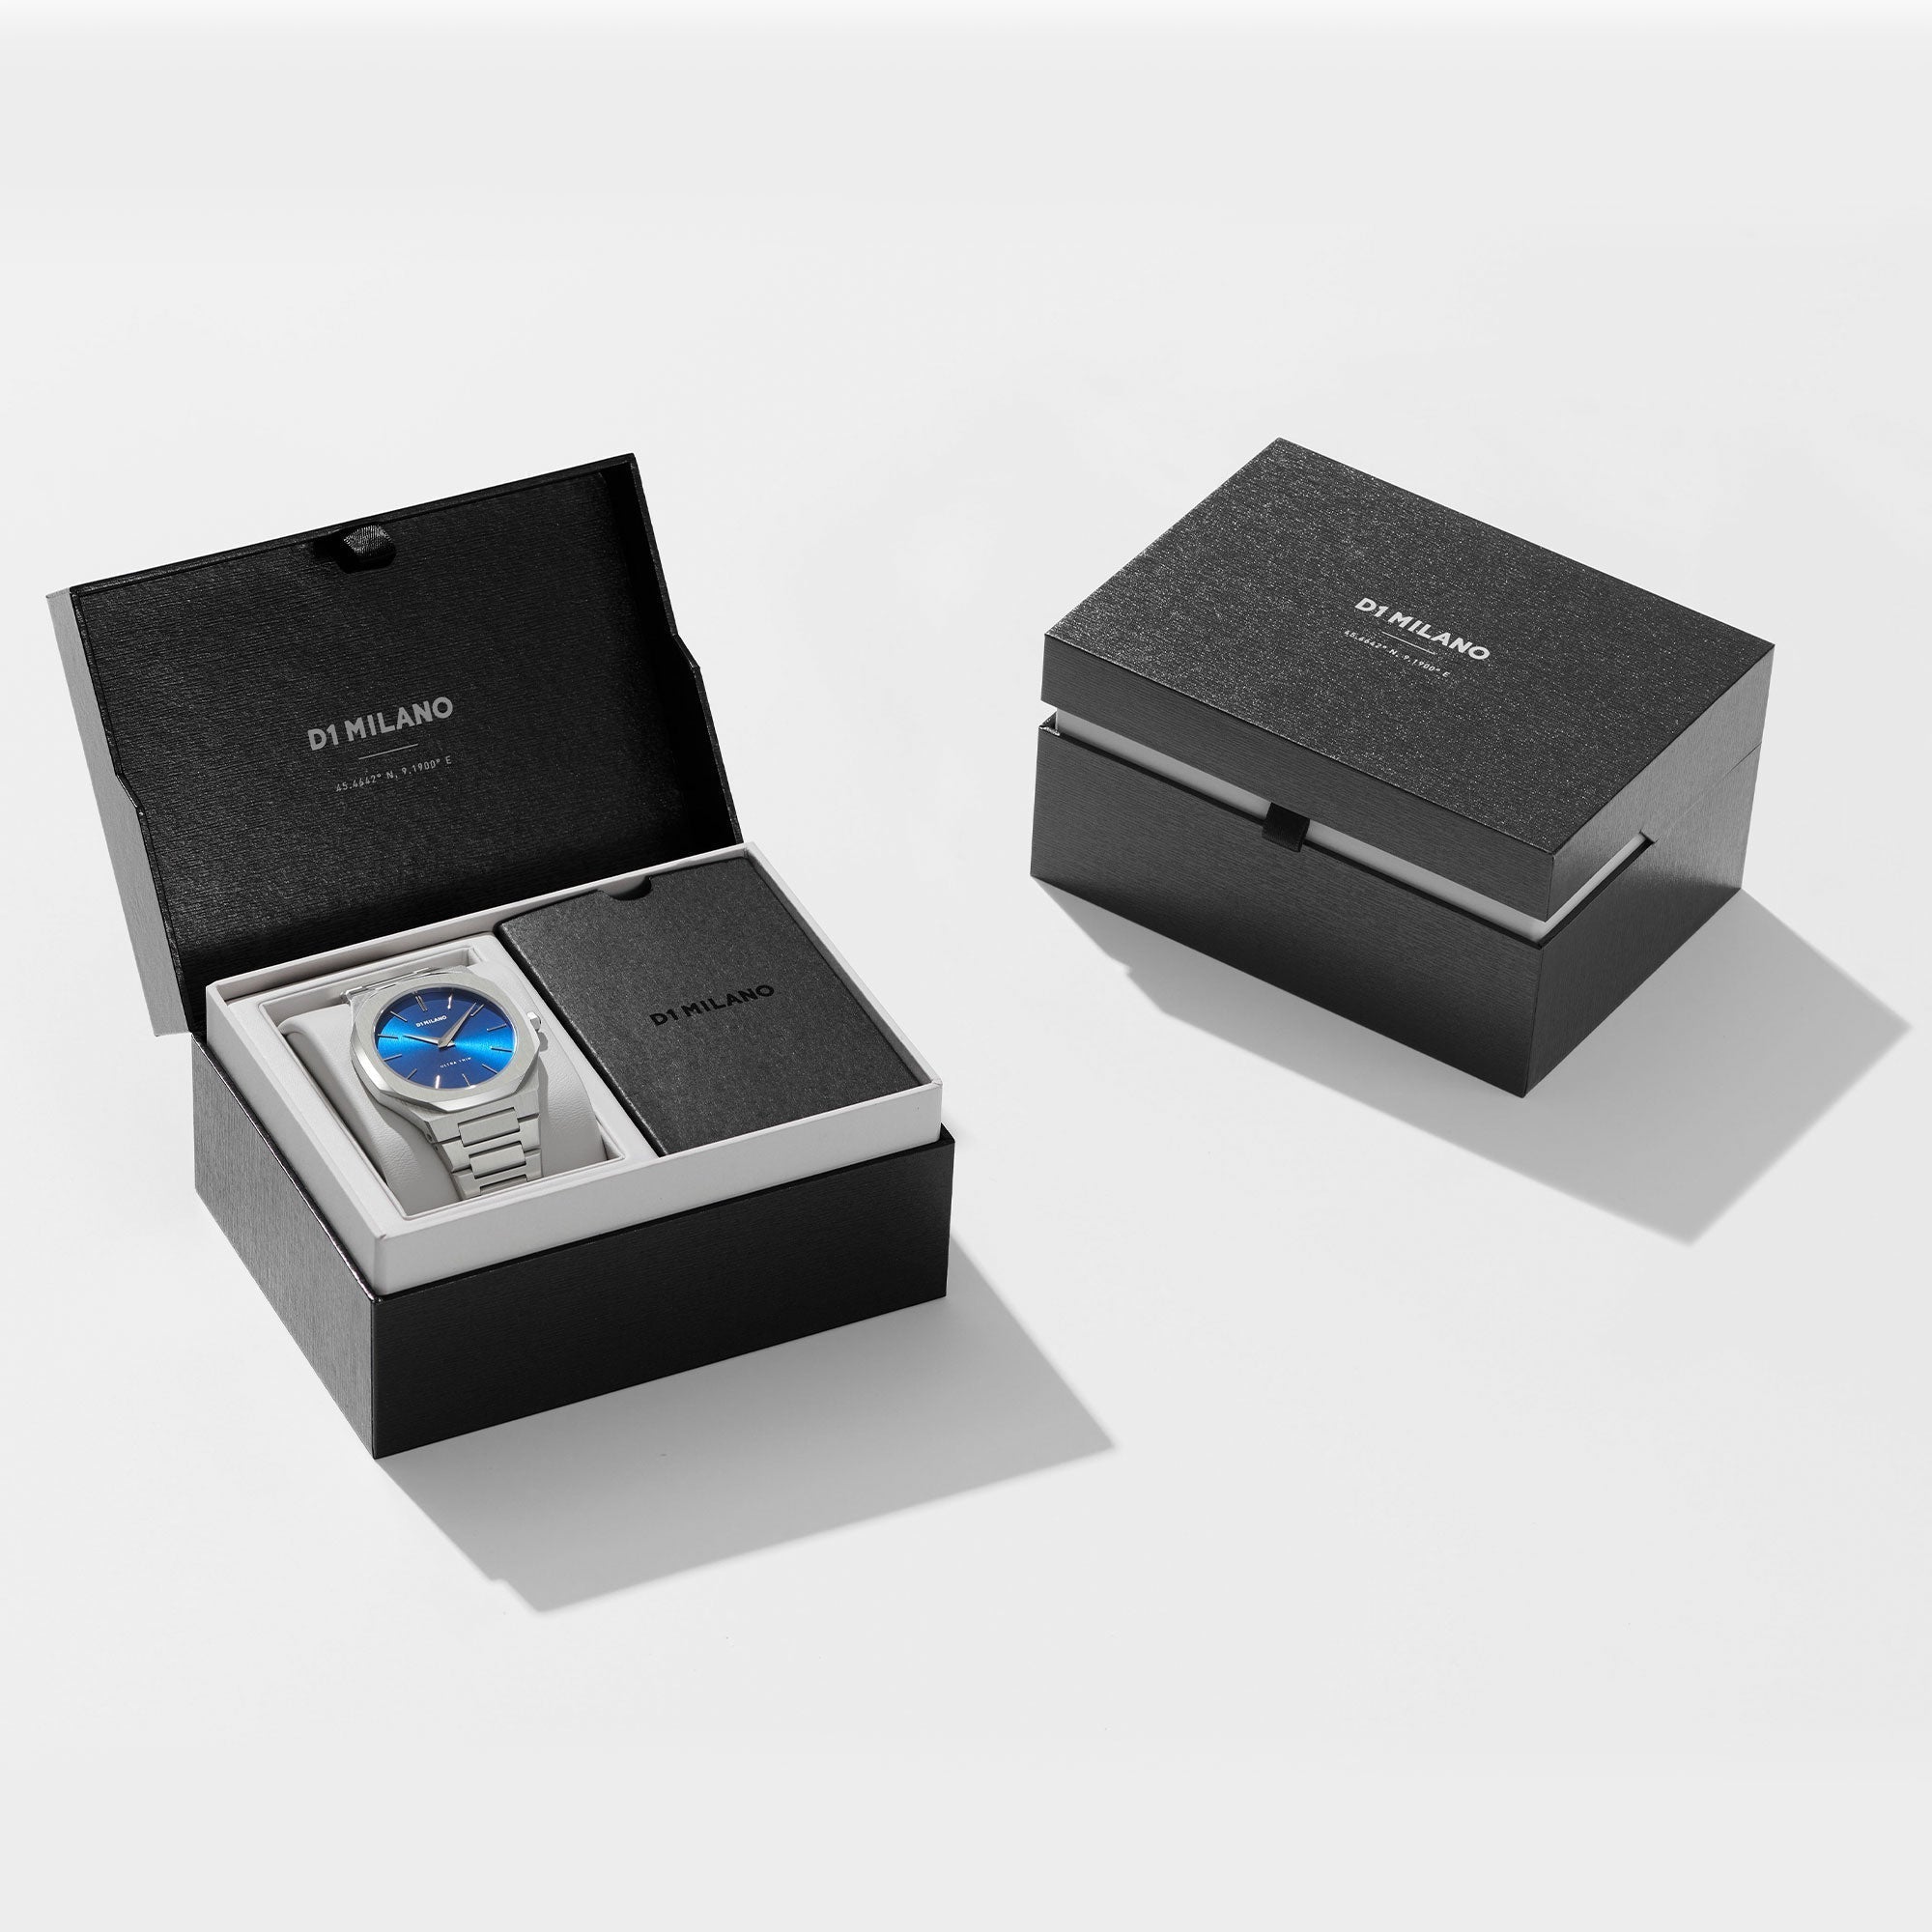 D1 Milano Ultra Slim 40mm Geo Watch-Quartz Watches-PEROZ Accessories